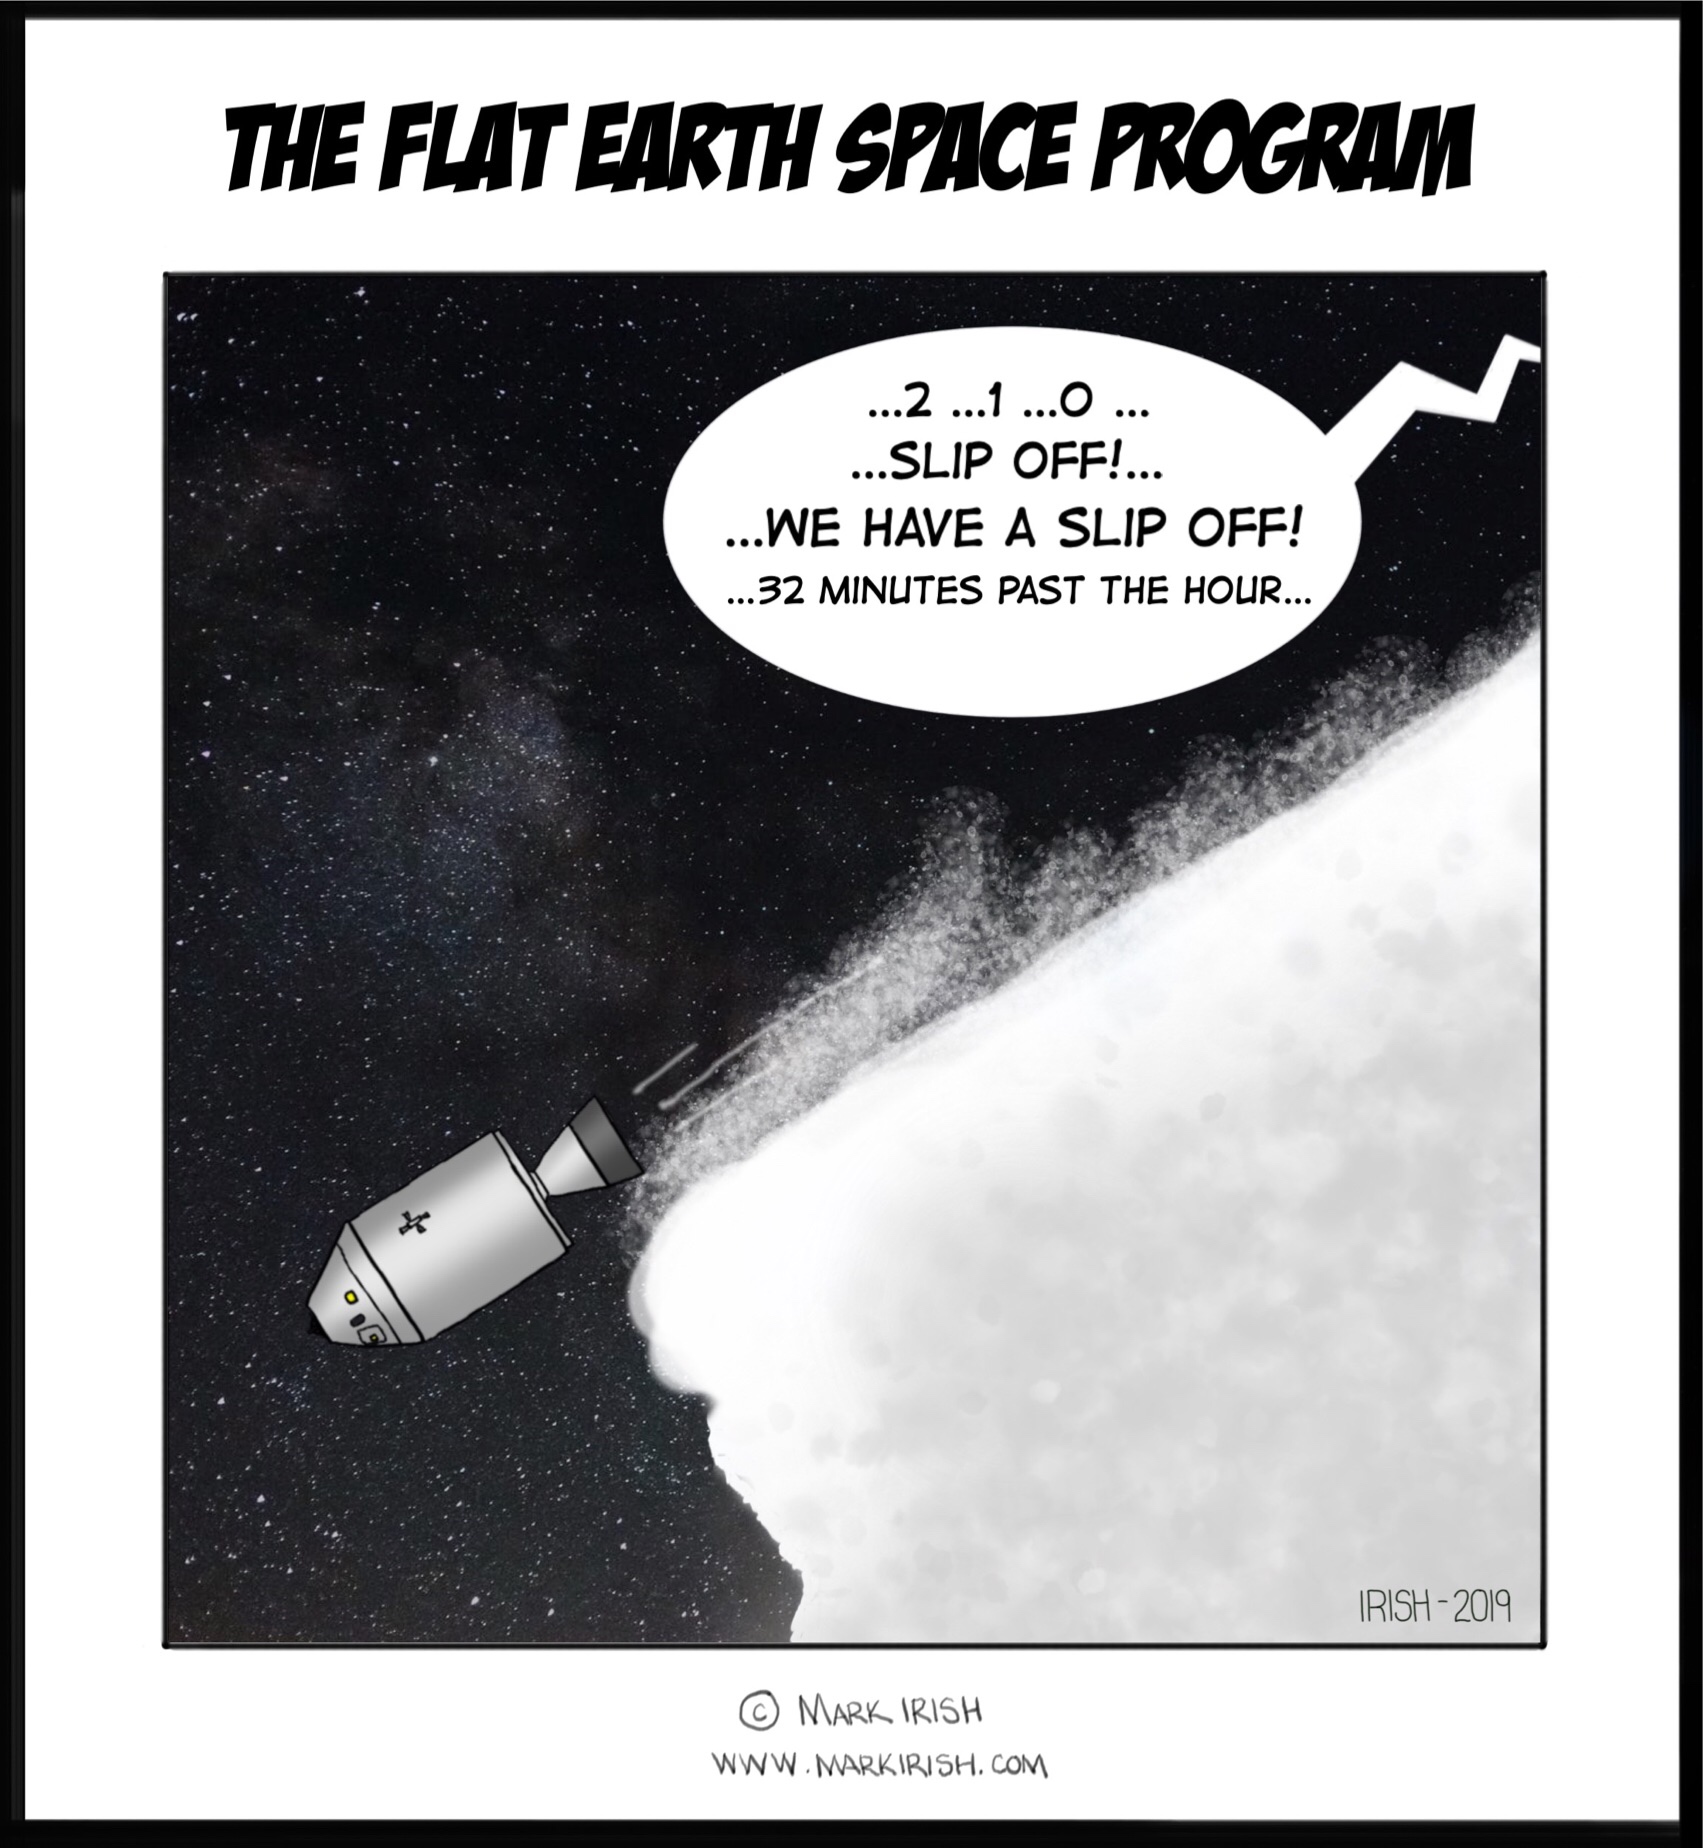 monochrome - The Flat Earth Space Program ...2...1...O ... ...Slip Off!... ...We Have A Slip Off! ...32 Minutes Past The Hour... Irish 200 Murk, Vrish Www Markirish.Com